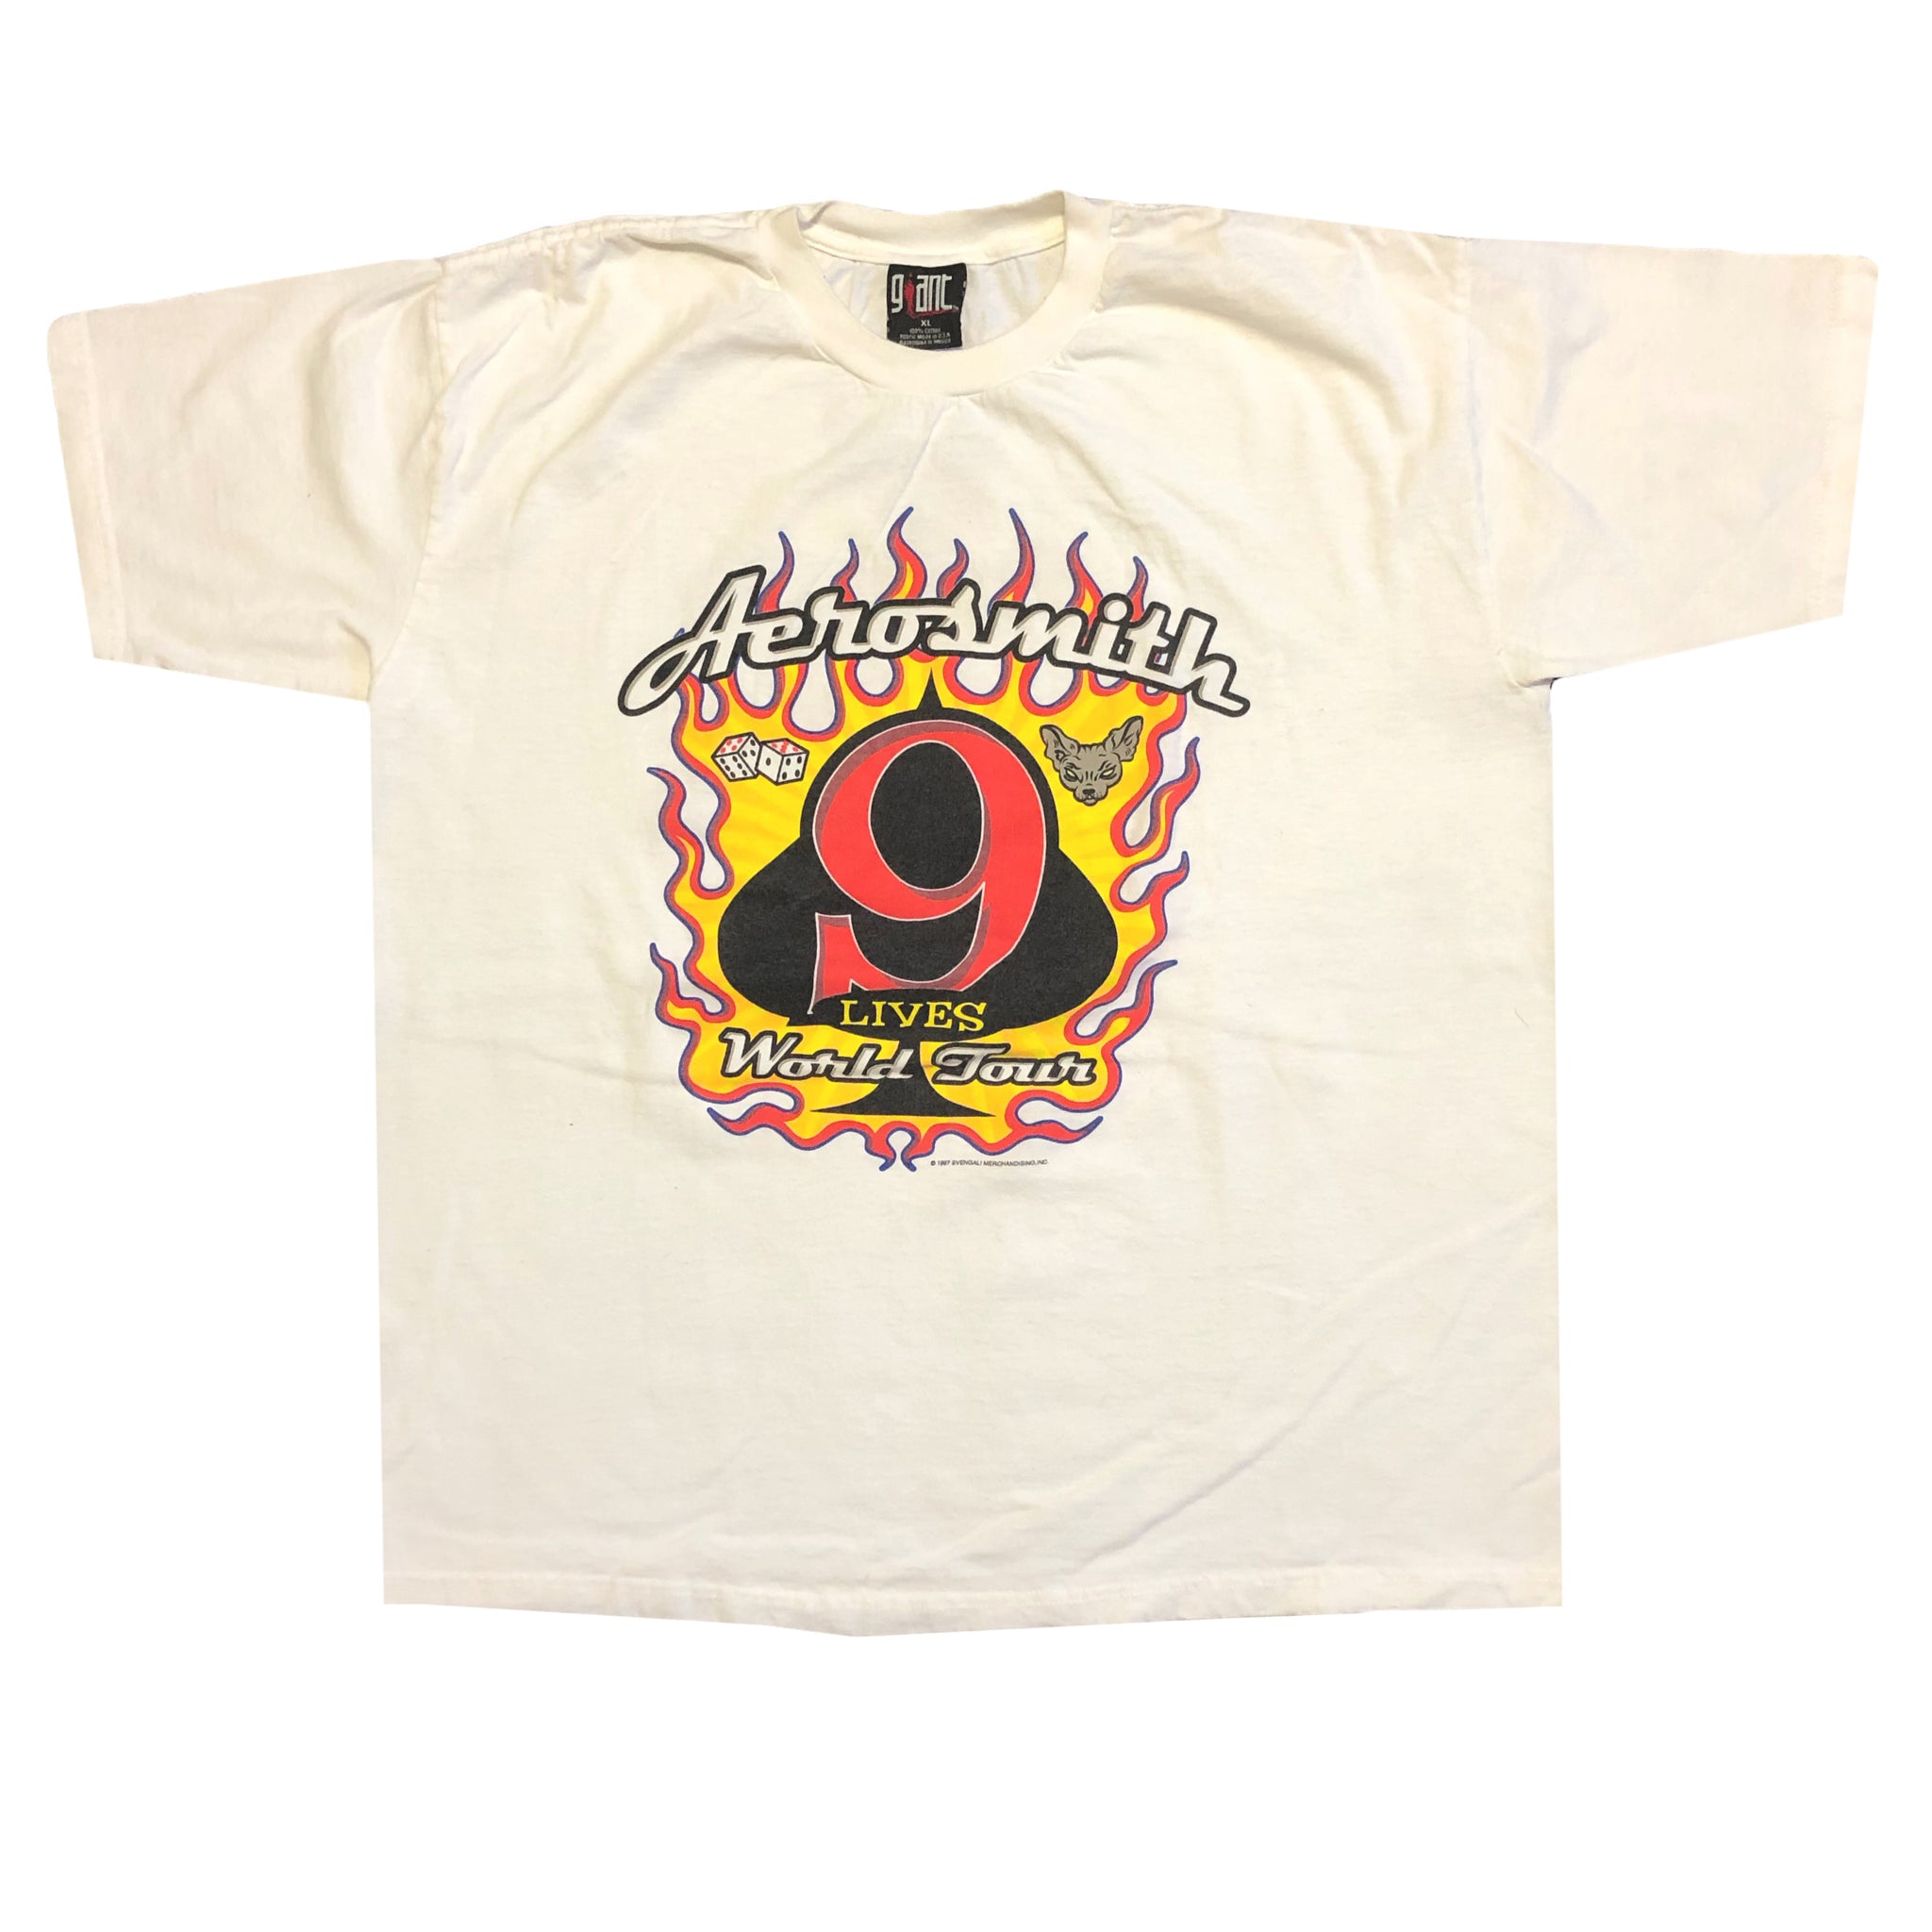 1997 Aerosmith 9 Lives Tour Shirt | Beyond 94